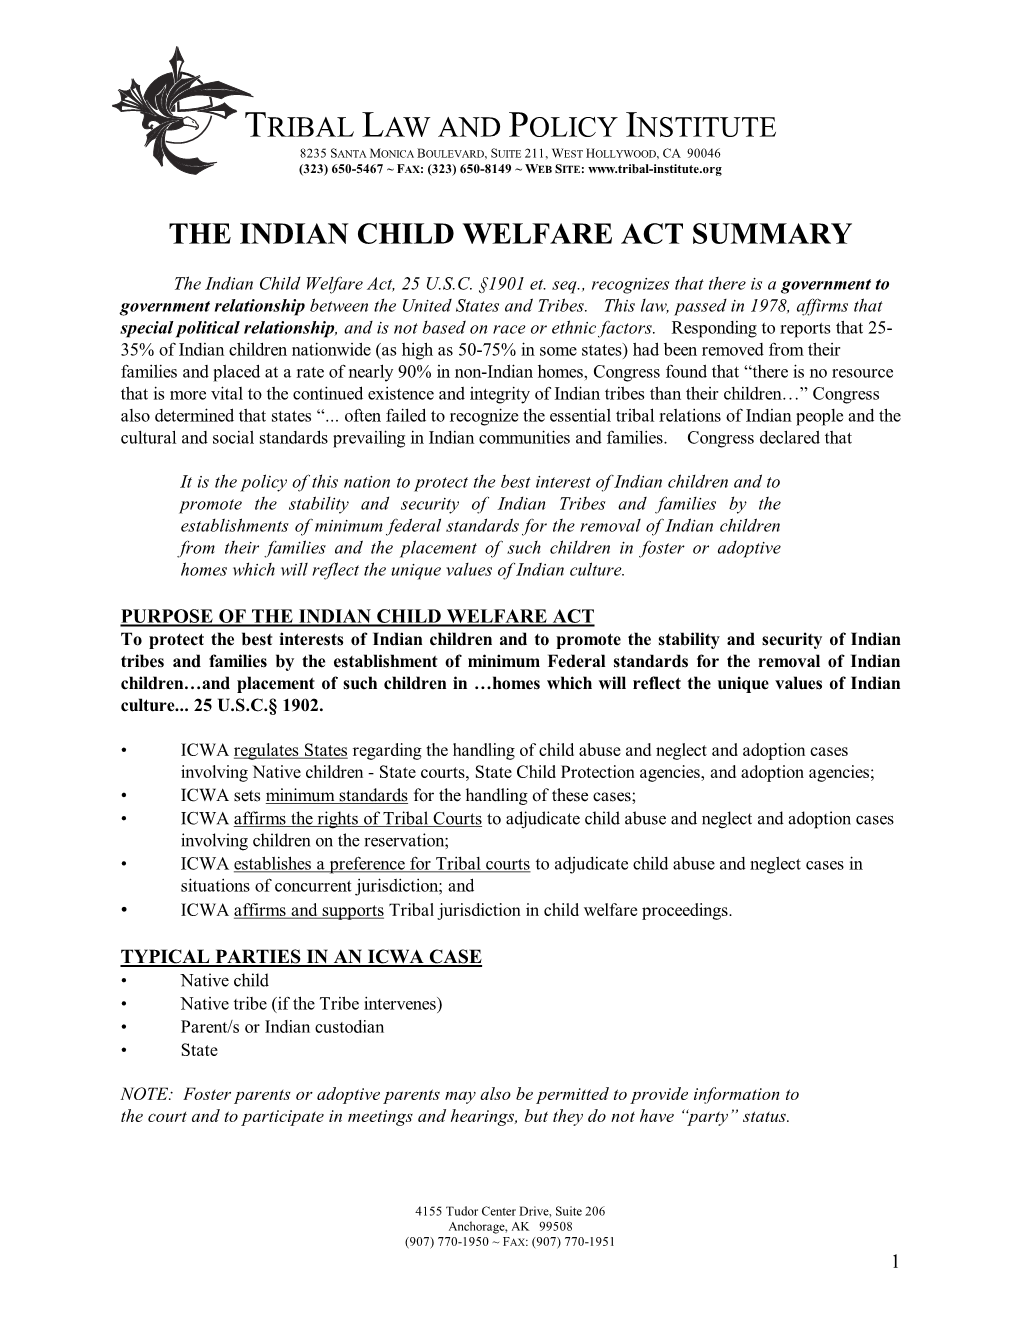 The Indian Child Welfare Act Summary